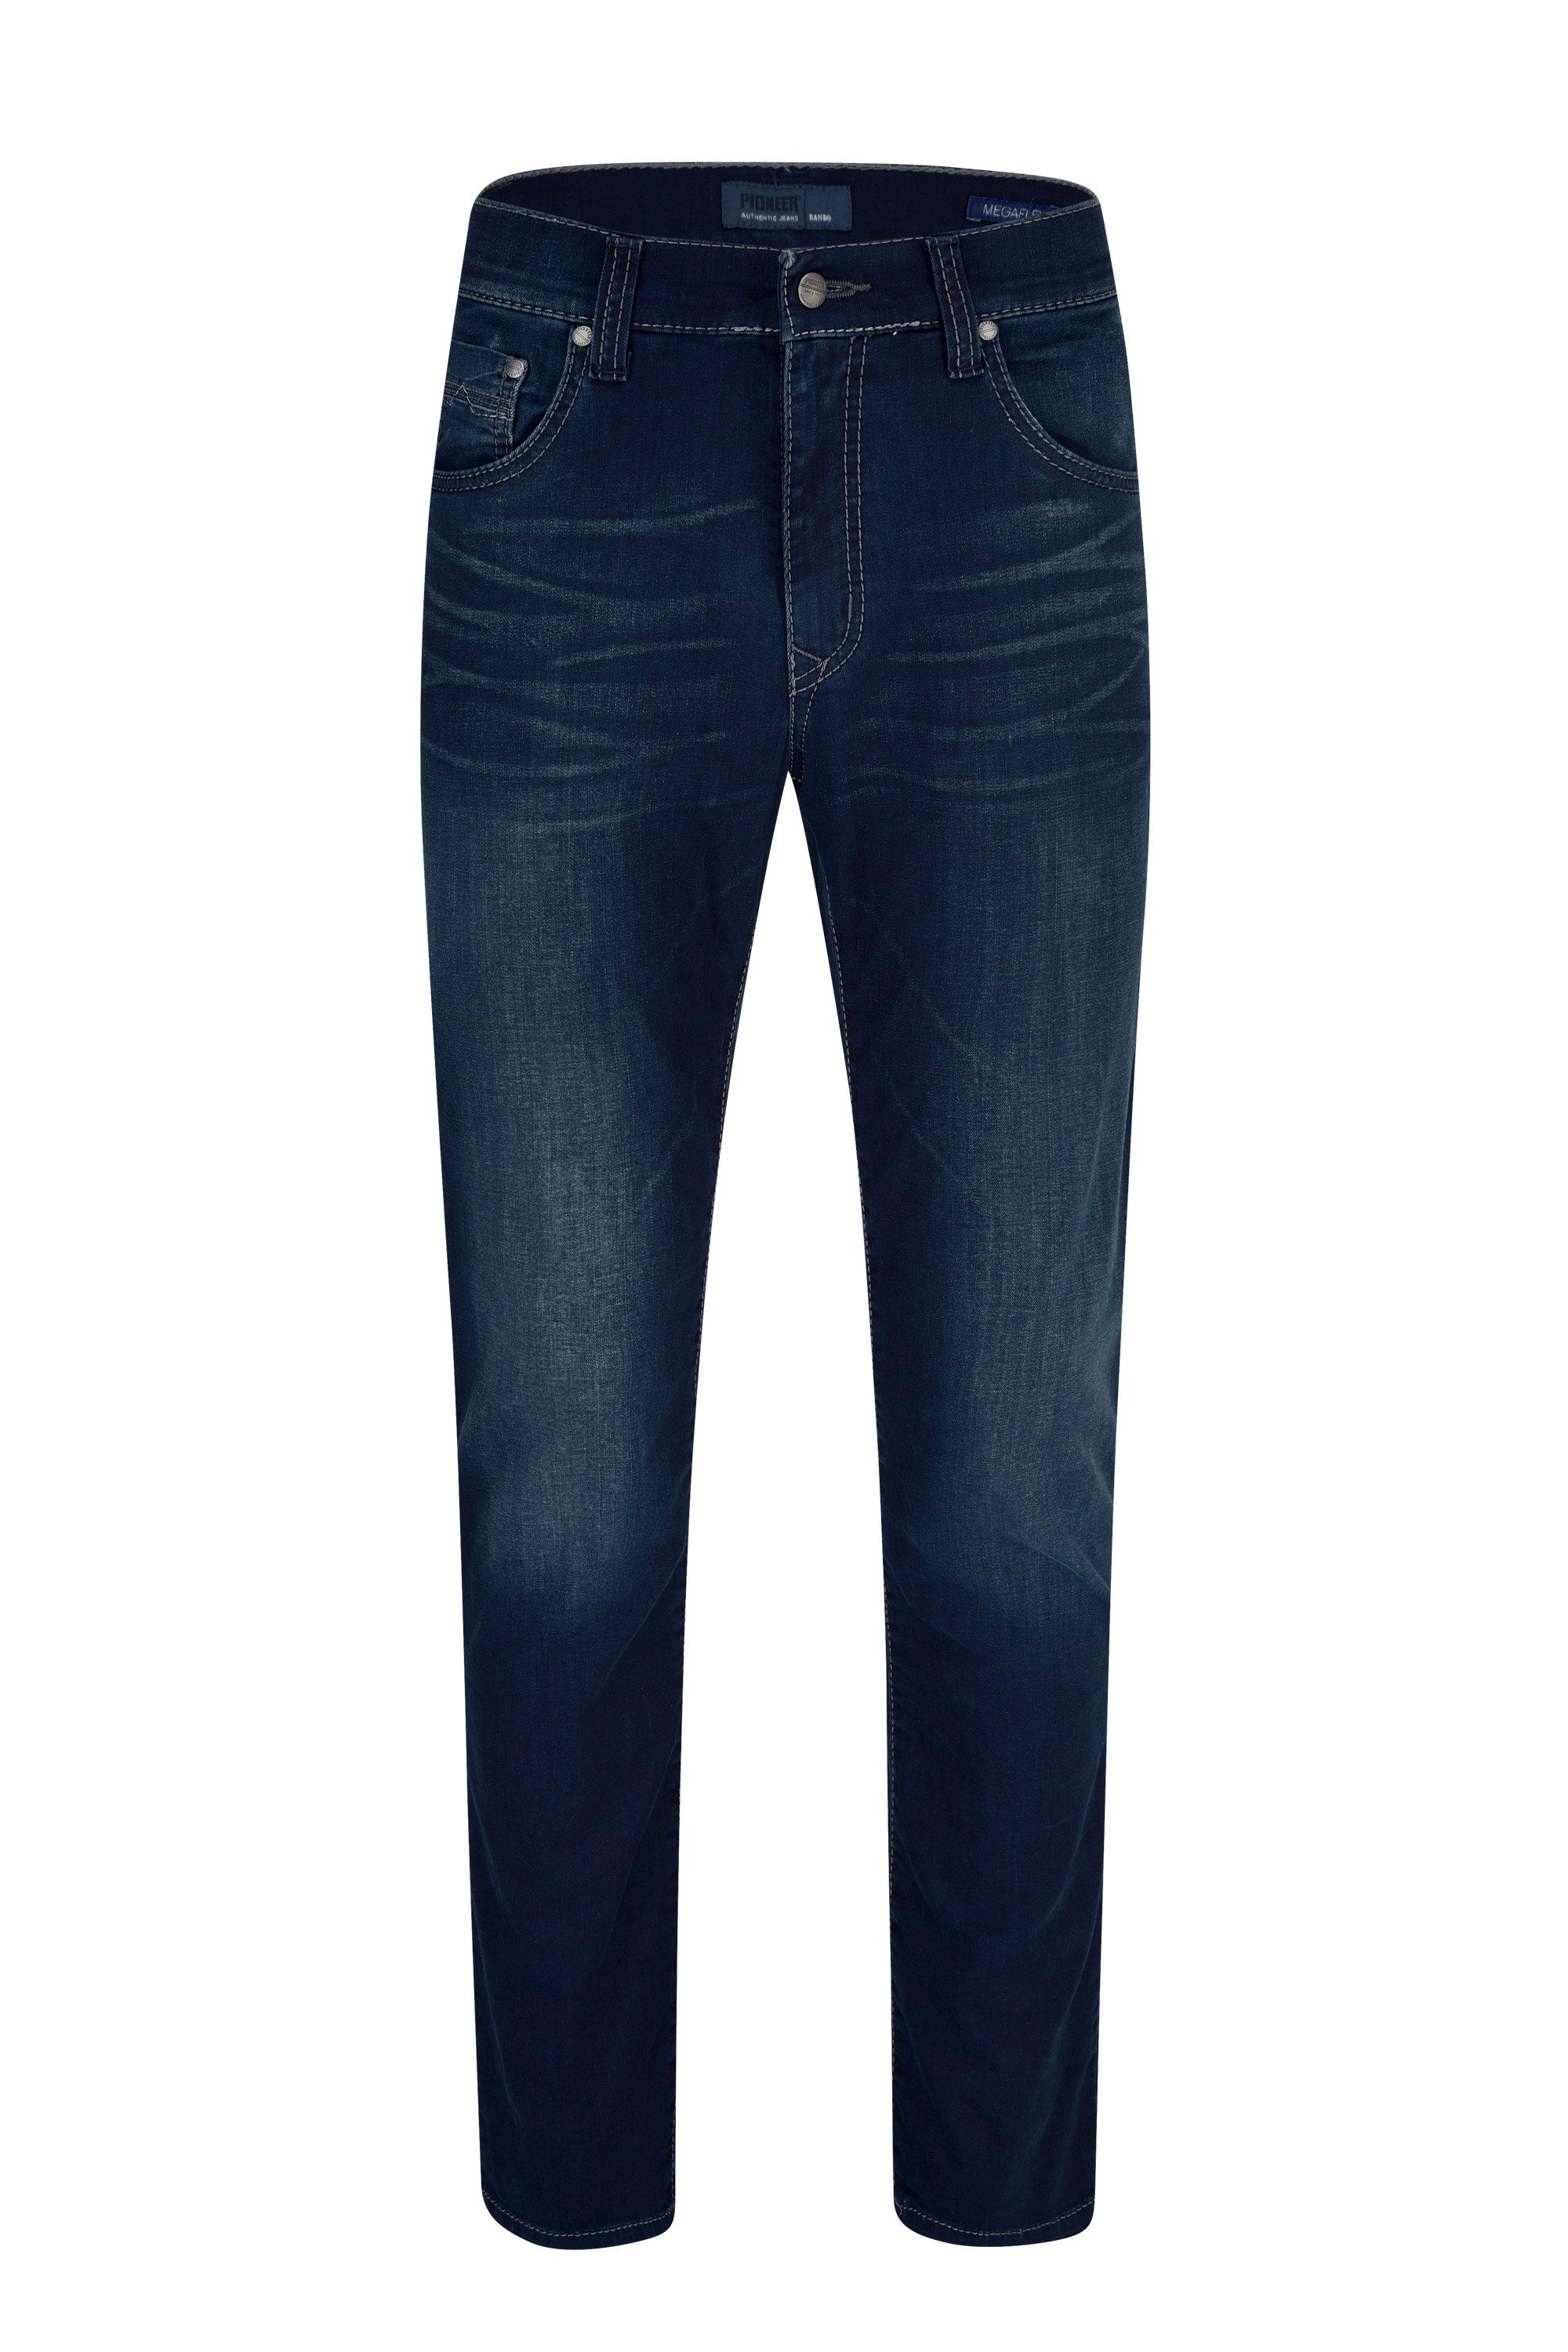 Pioneer Authentic Jeans 5-Pocket-Jeans »PIONEER RANDO MEGAFLEX dark used  1674 9803.432 -« online kaufen | OTTO